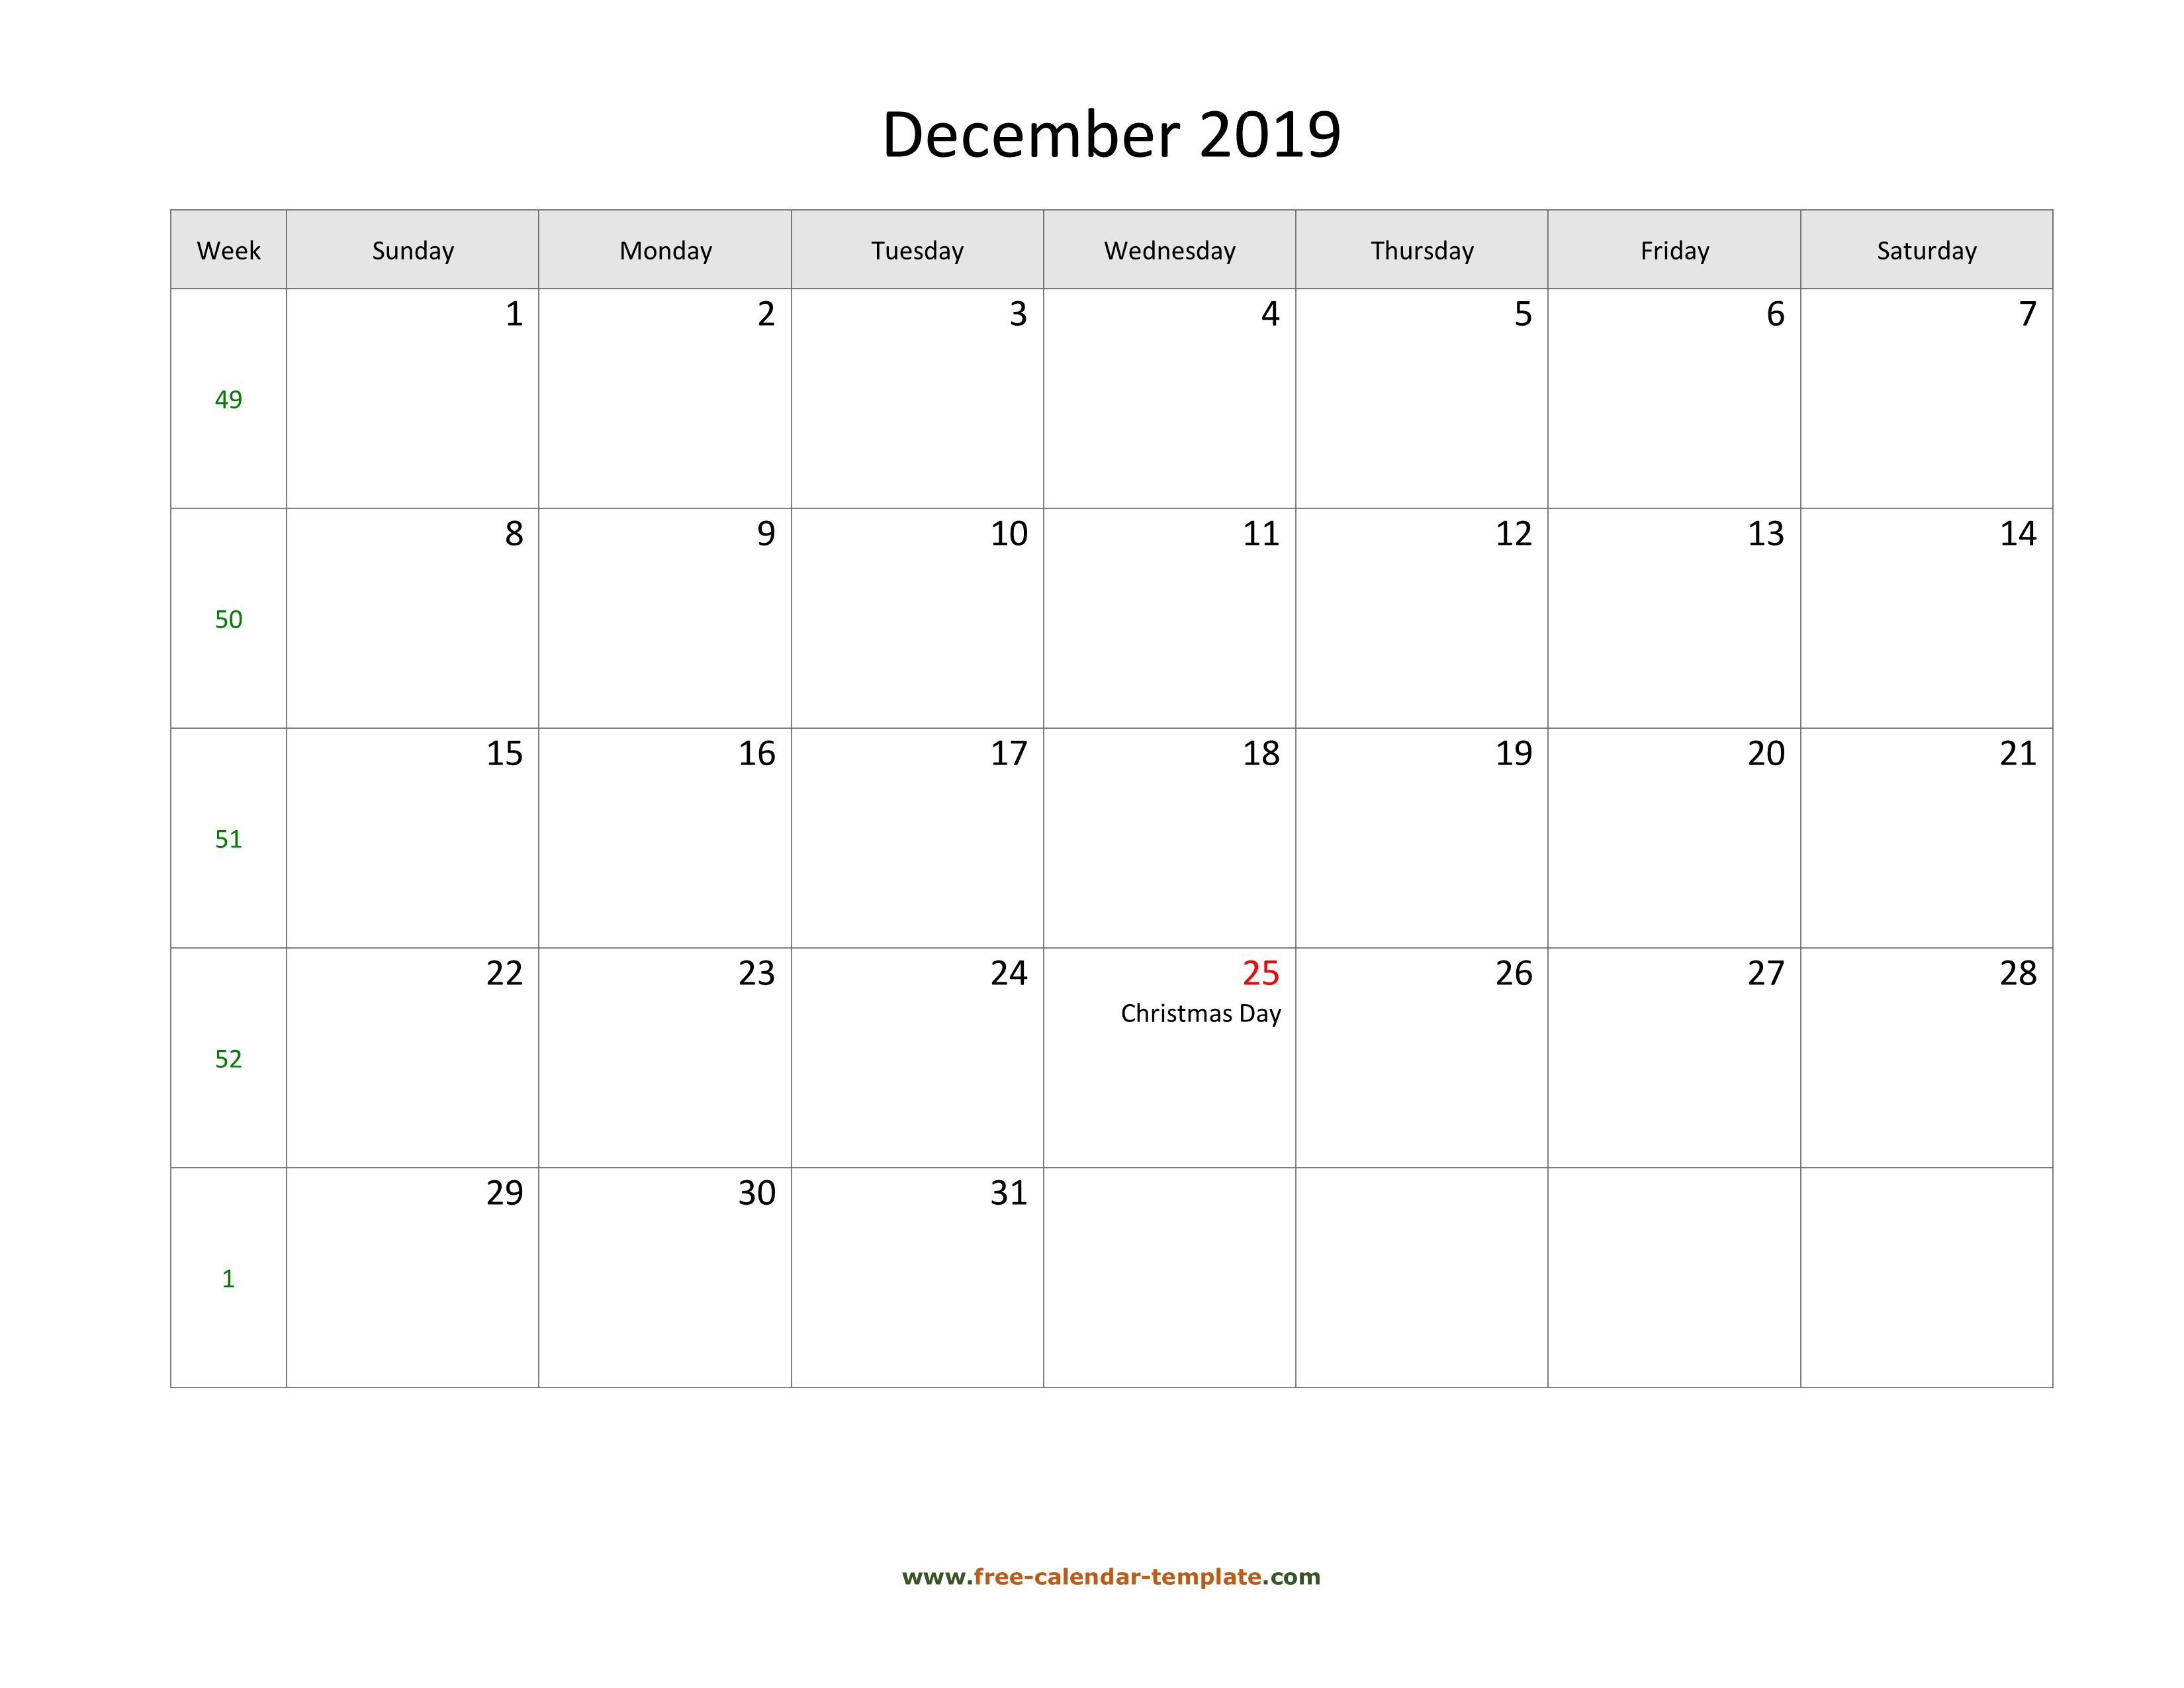 December 2019 Free Calendar Tempplate | Freecalendar inside Fillable Printable Calendar